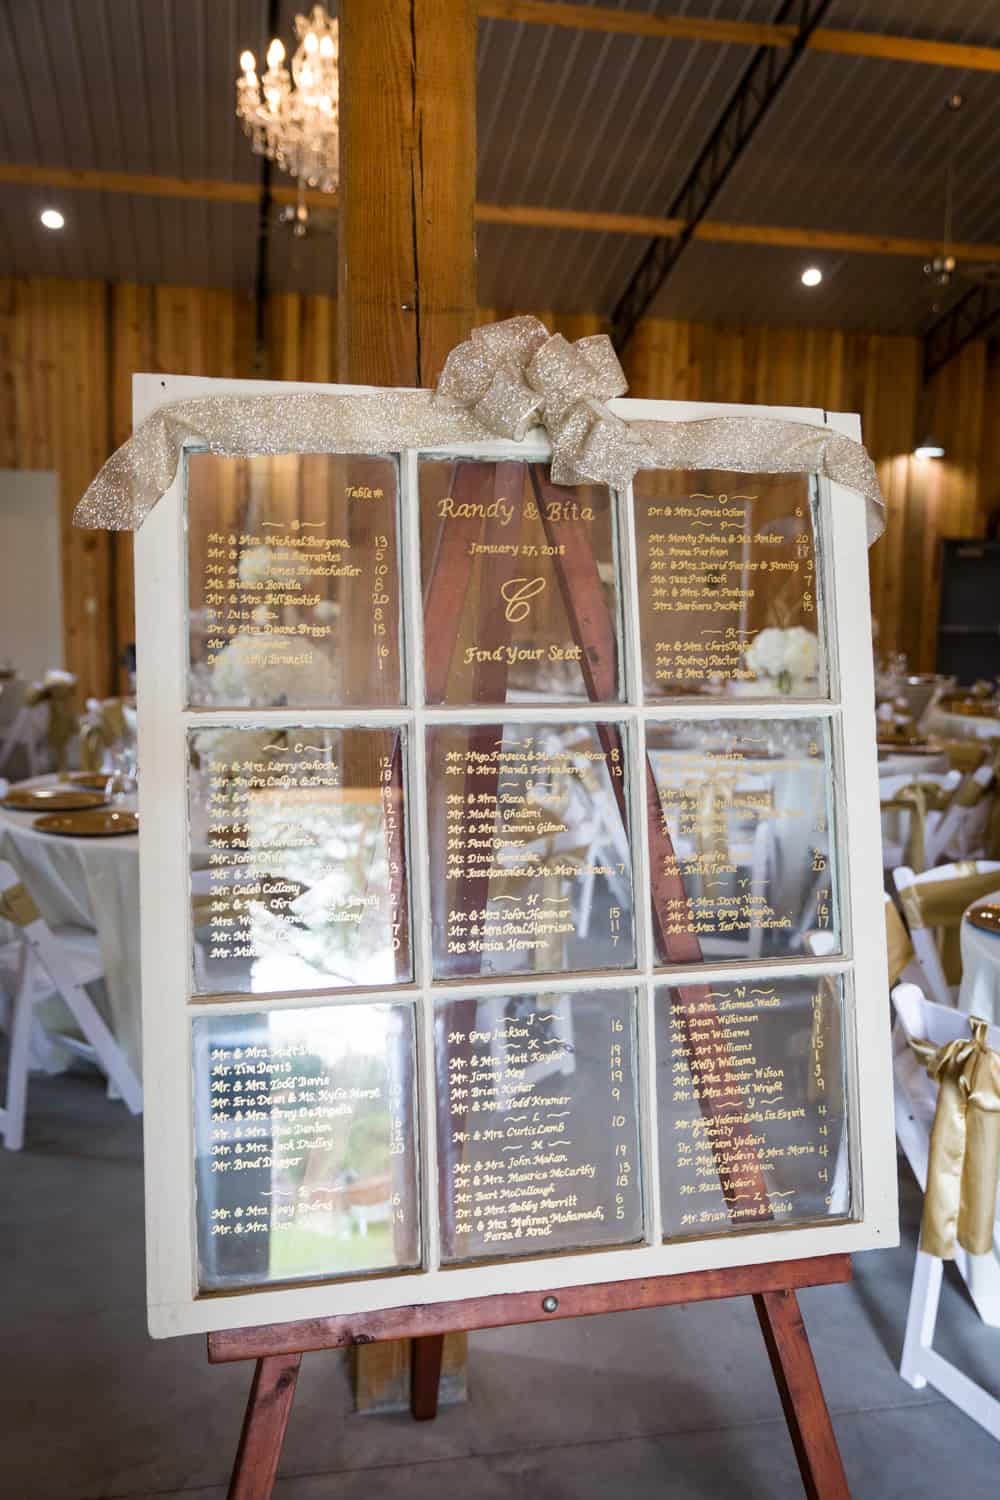 Window written with wedding seating chart